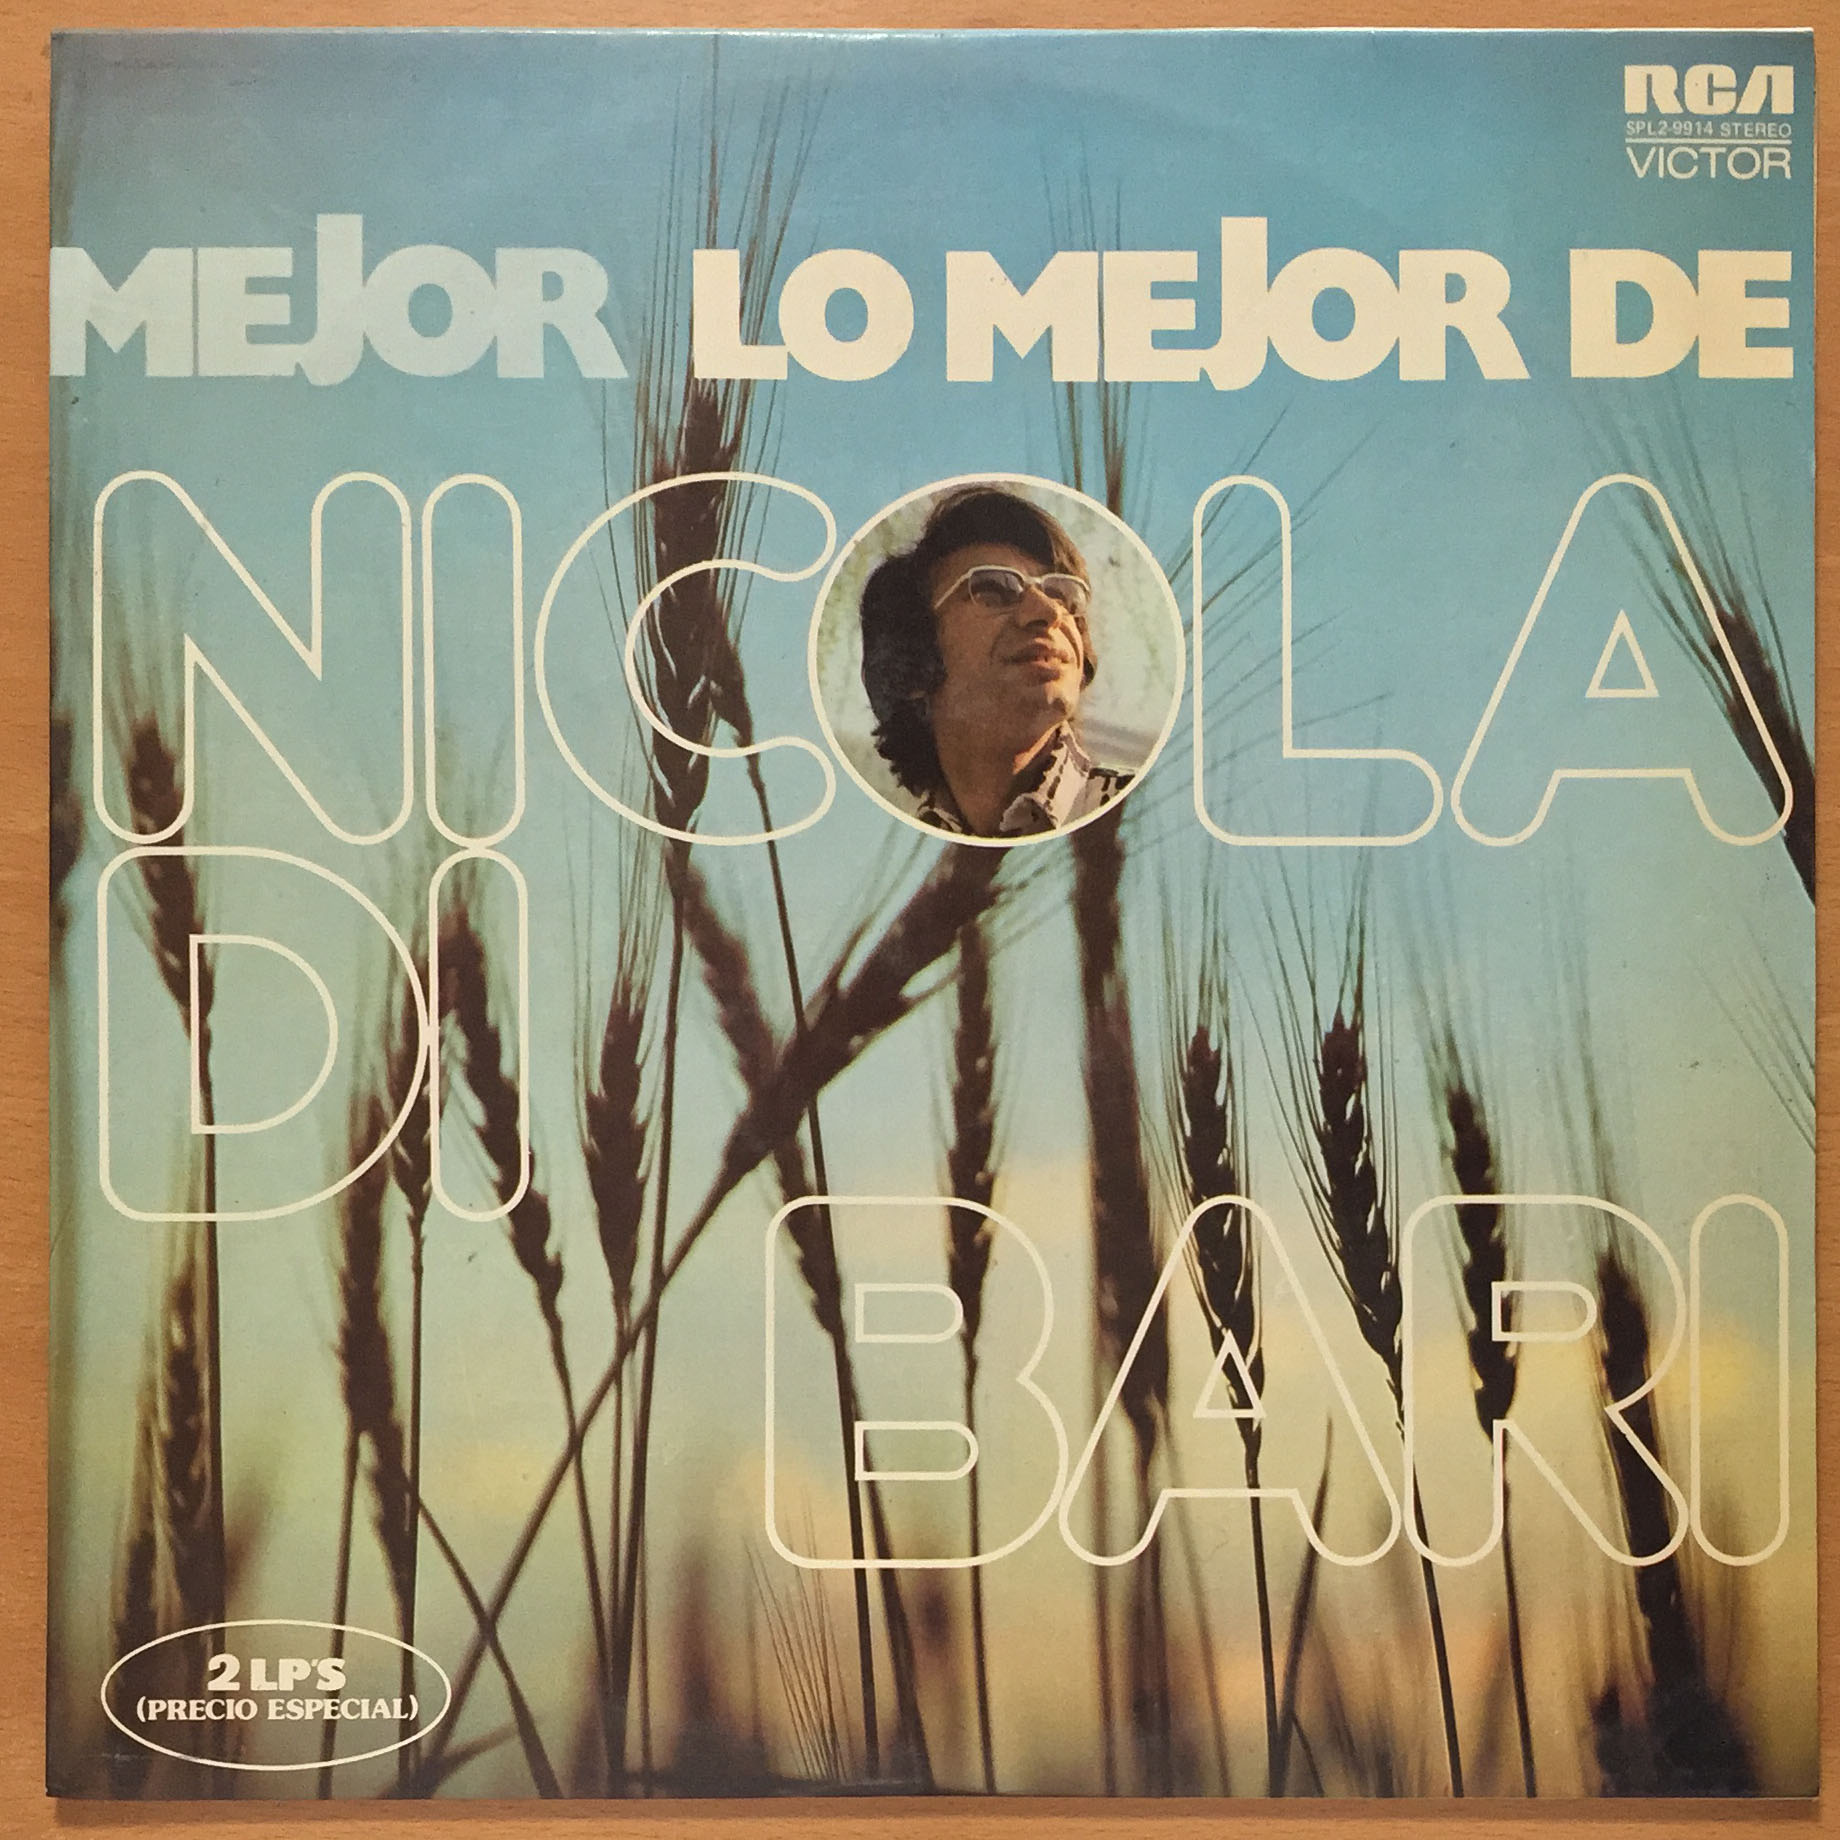 Nicola di Bari-Lo mejor de Nicola di Bari. 1972 RCA